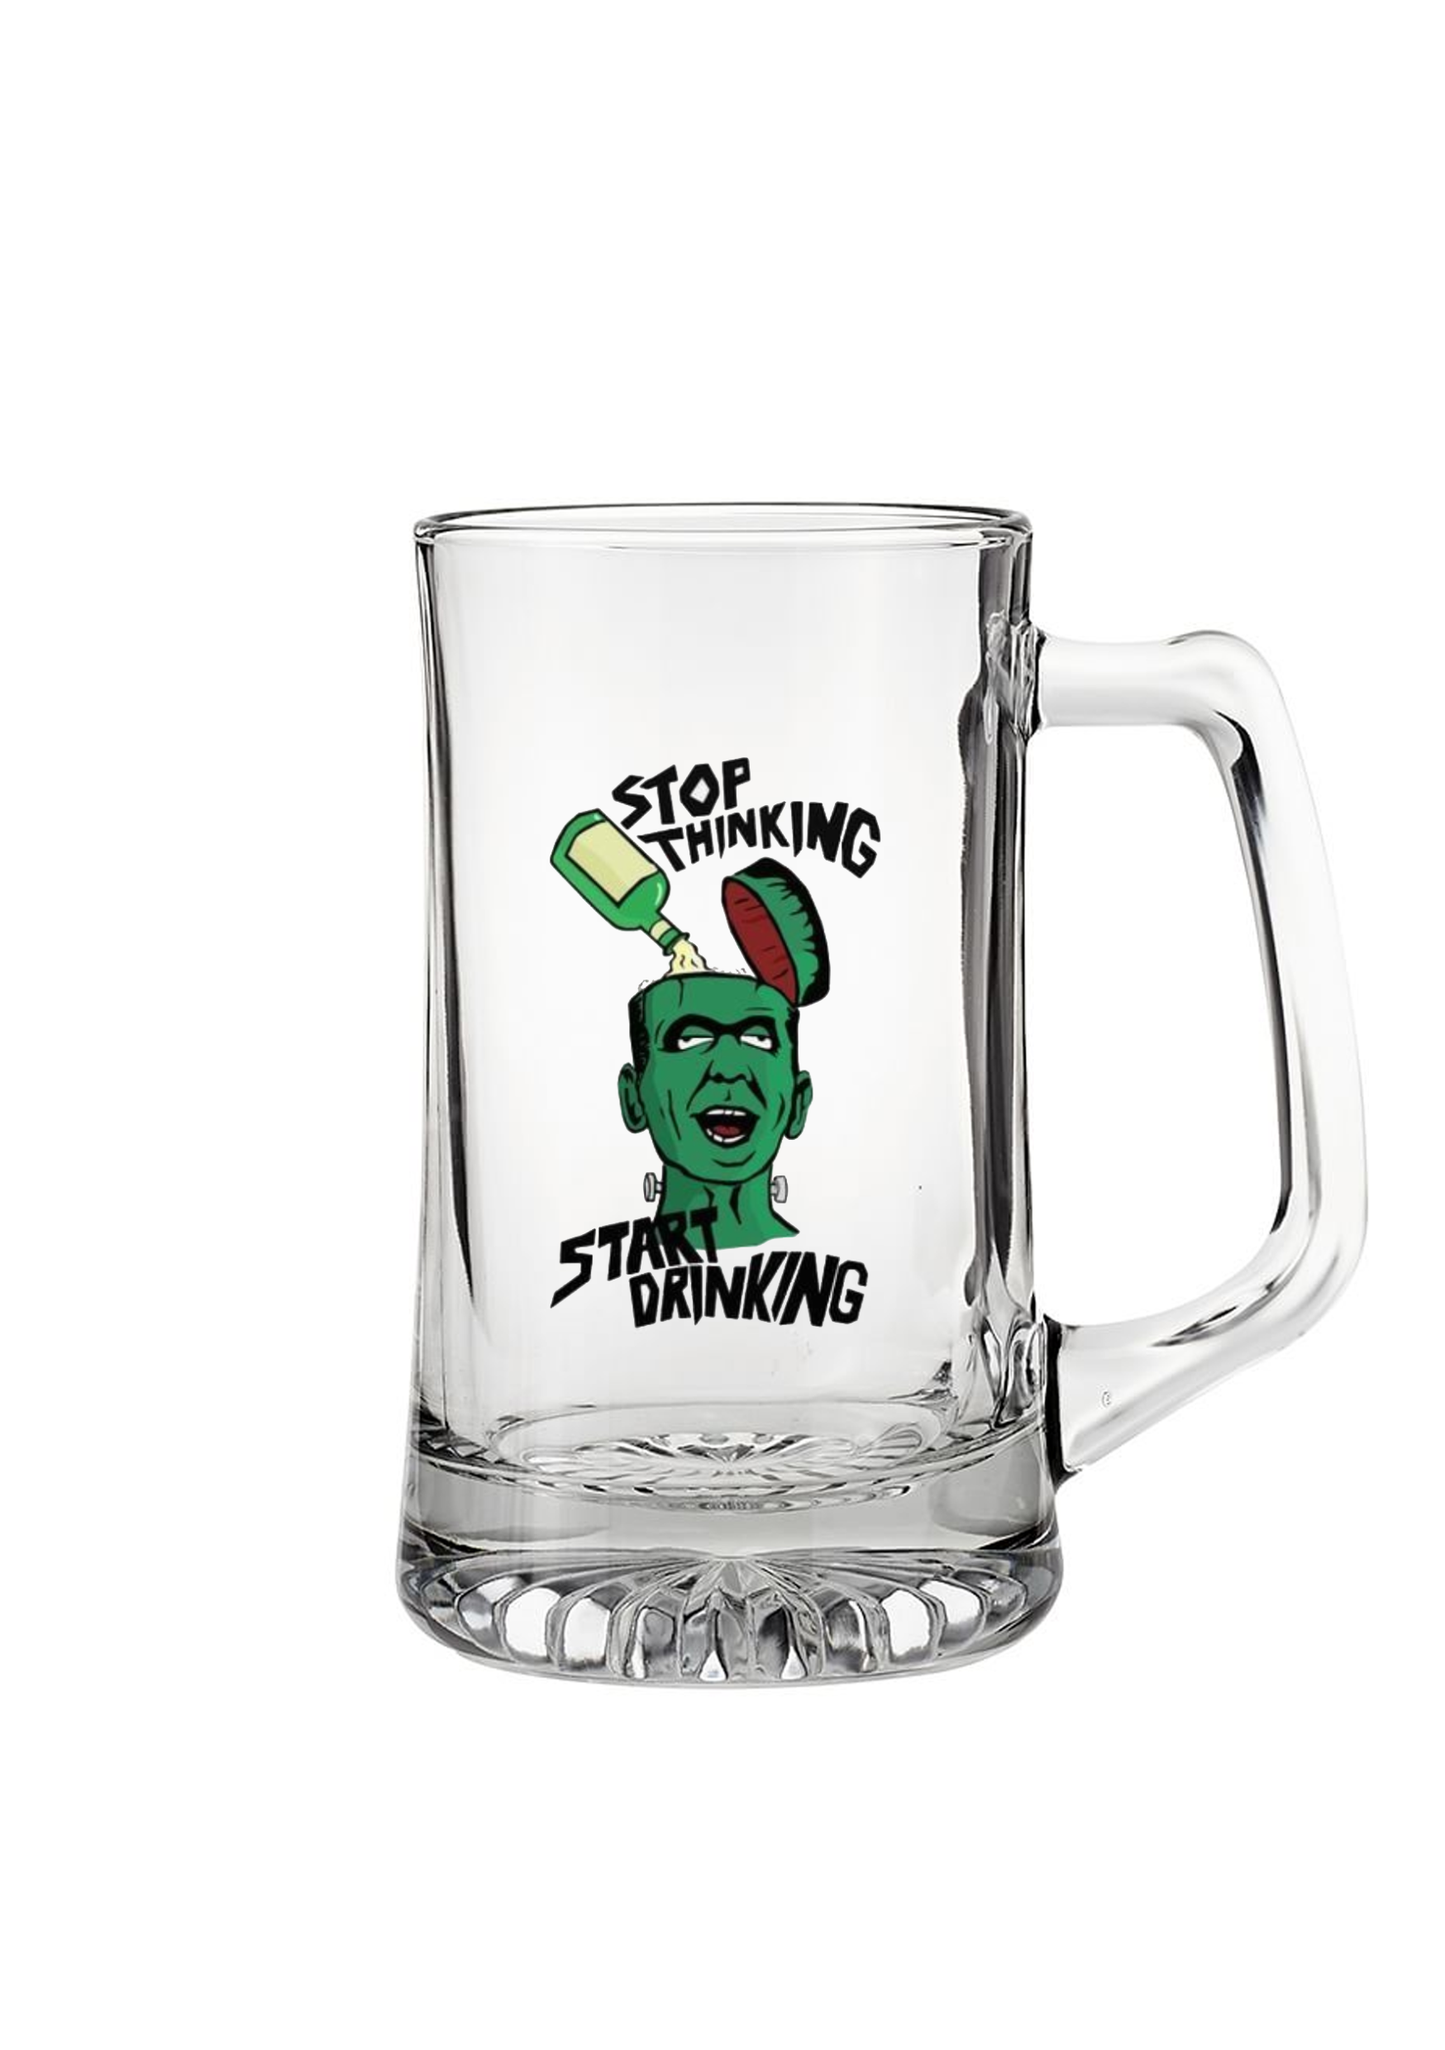 mugs - stop thinking let's start drinking